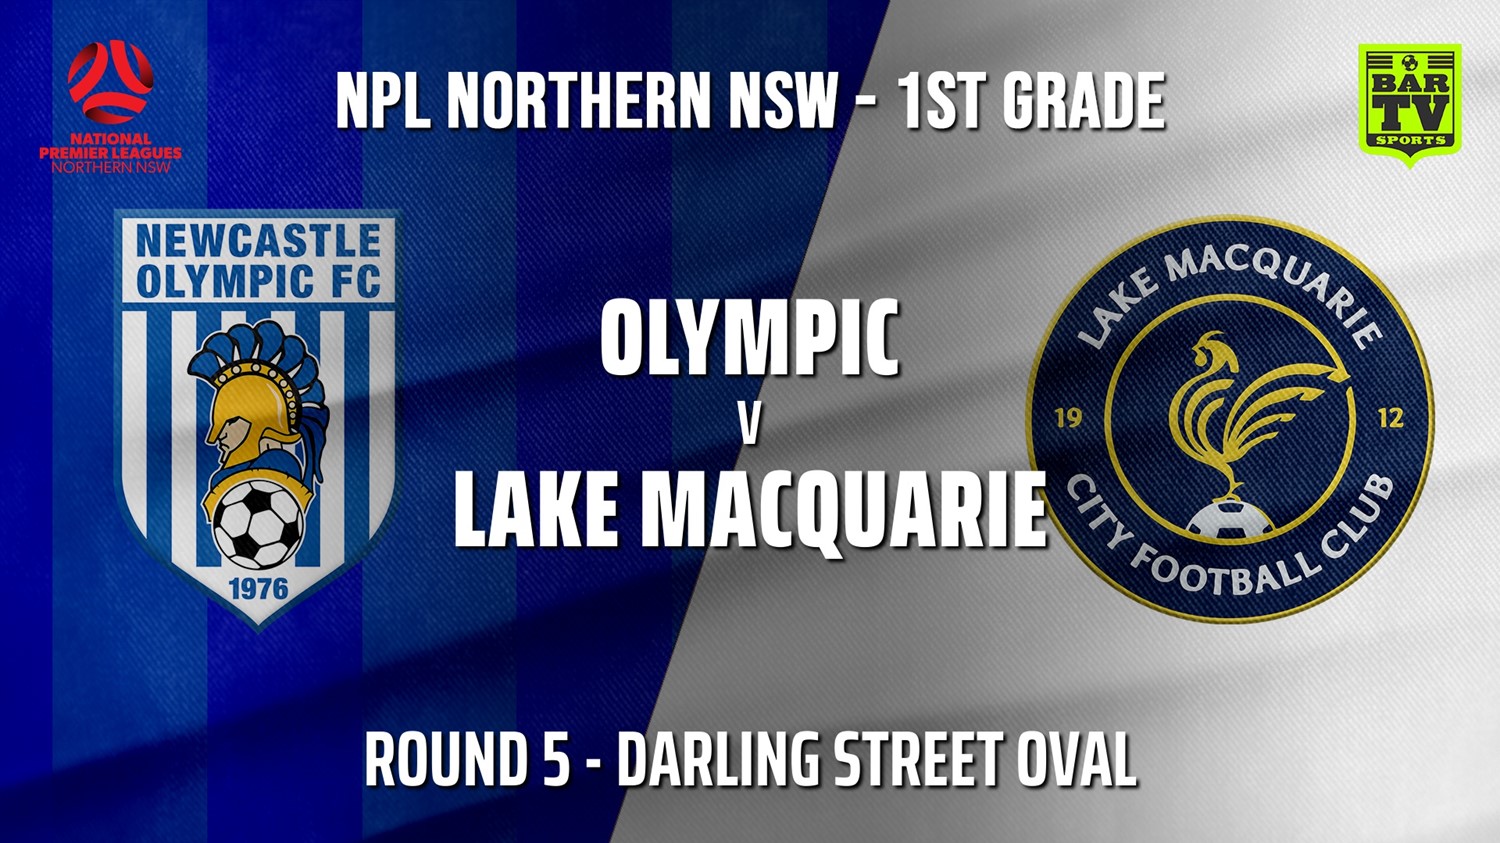 210421-NPL - NNSW Round 5 - Newcastle Olympic v Lake Macquarie City FC Minigame Slate Image